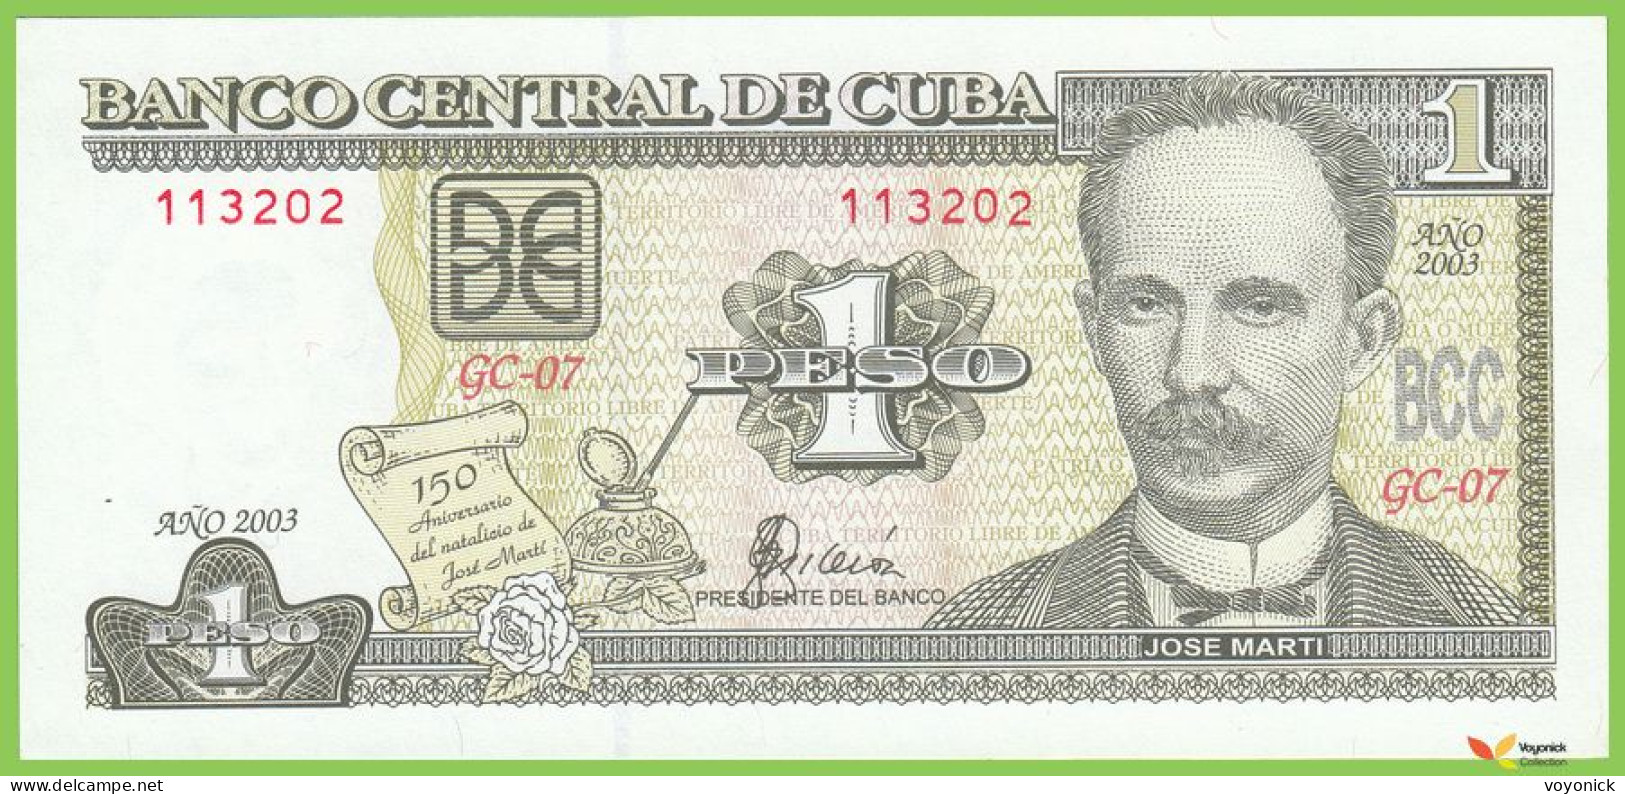 Voyo CUBA 1 Peso 2003 P125 B913a GC-07 UNC Commemorative - Cuba